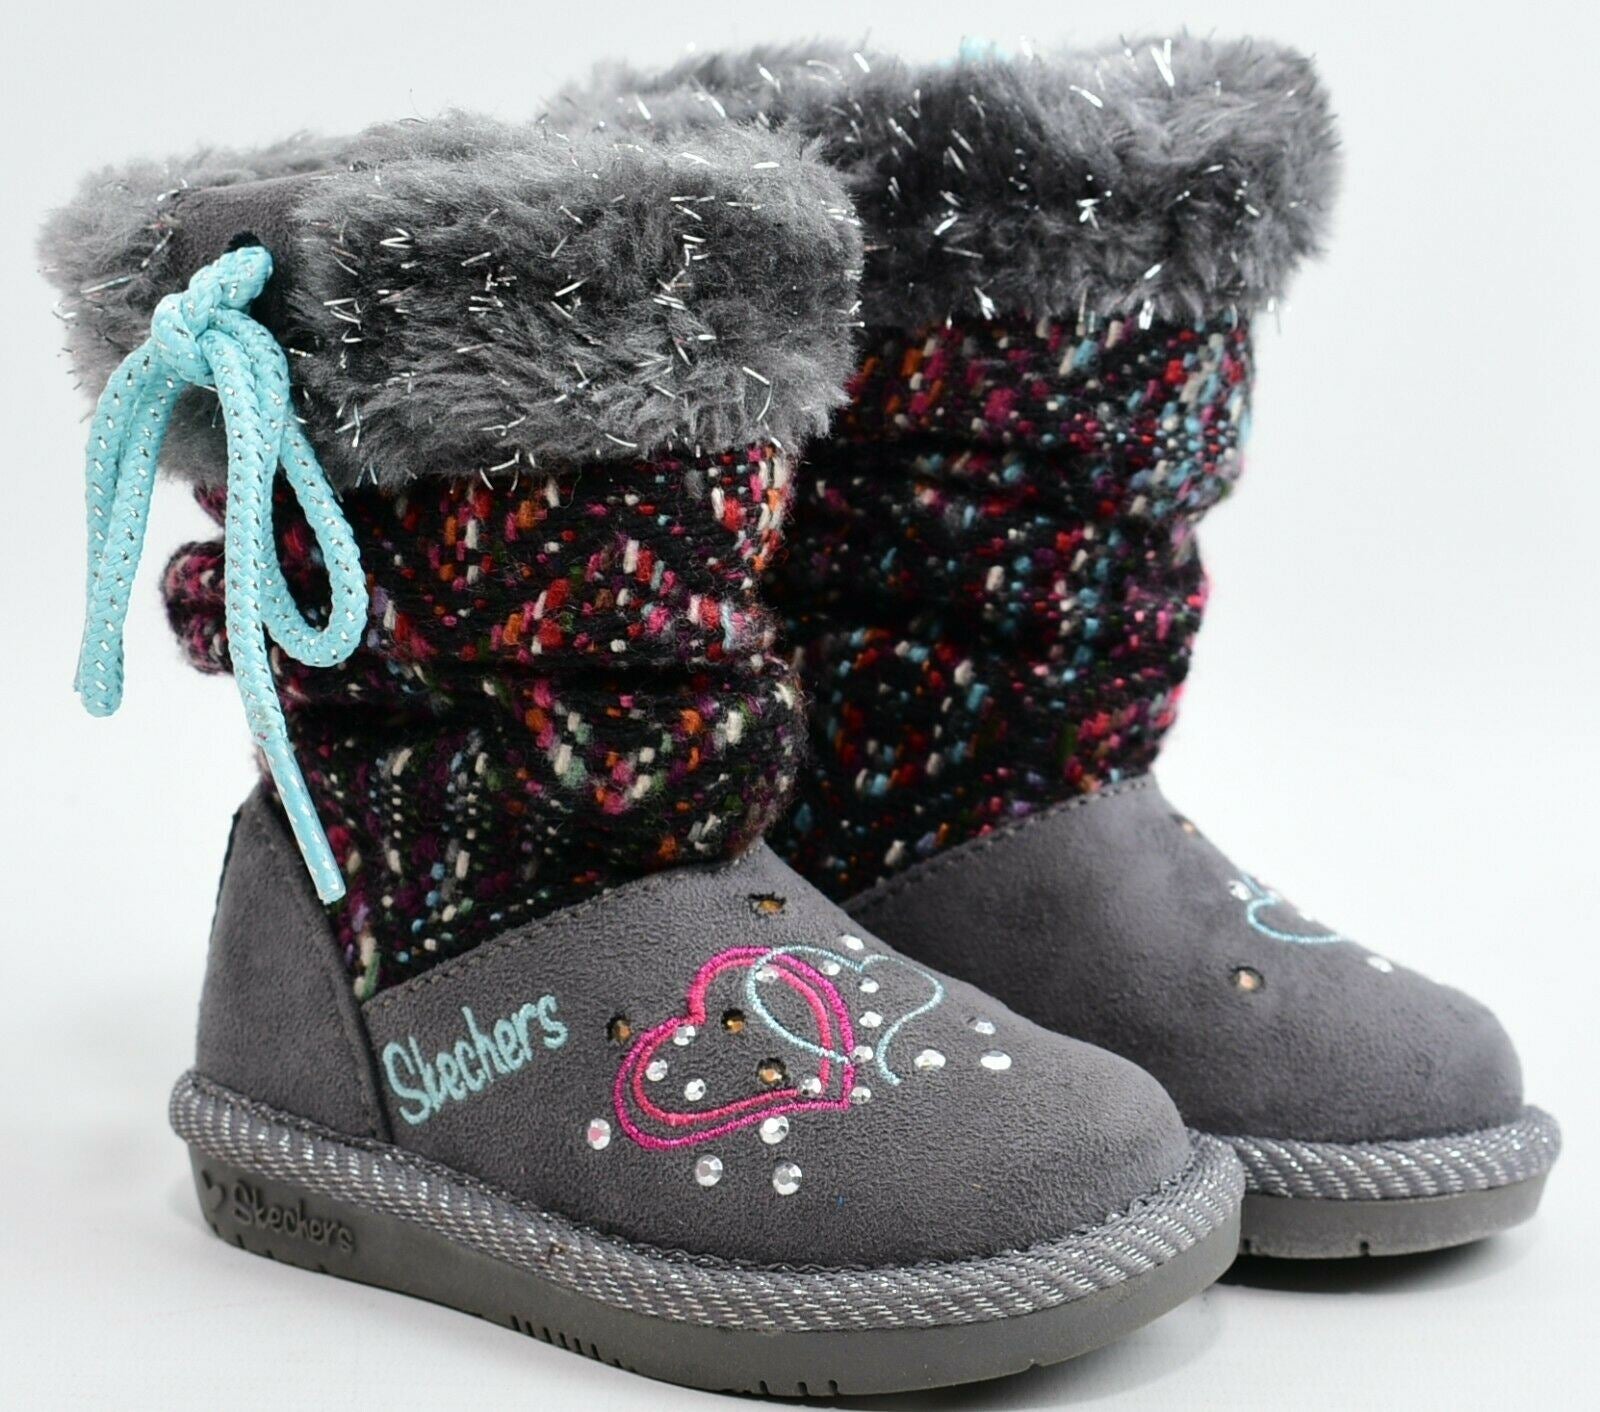 SKECHERS Twinkle Toes Girls' Light Up Boots, Grey/Multi, infant UK 5 / EU 22